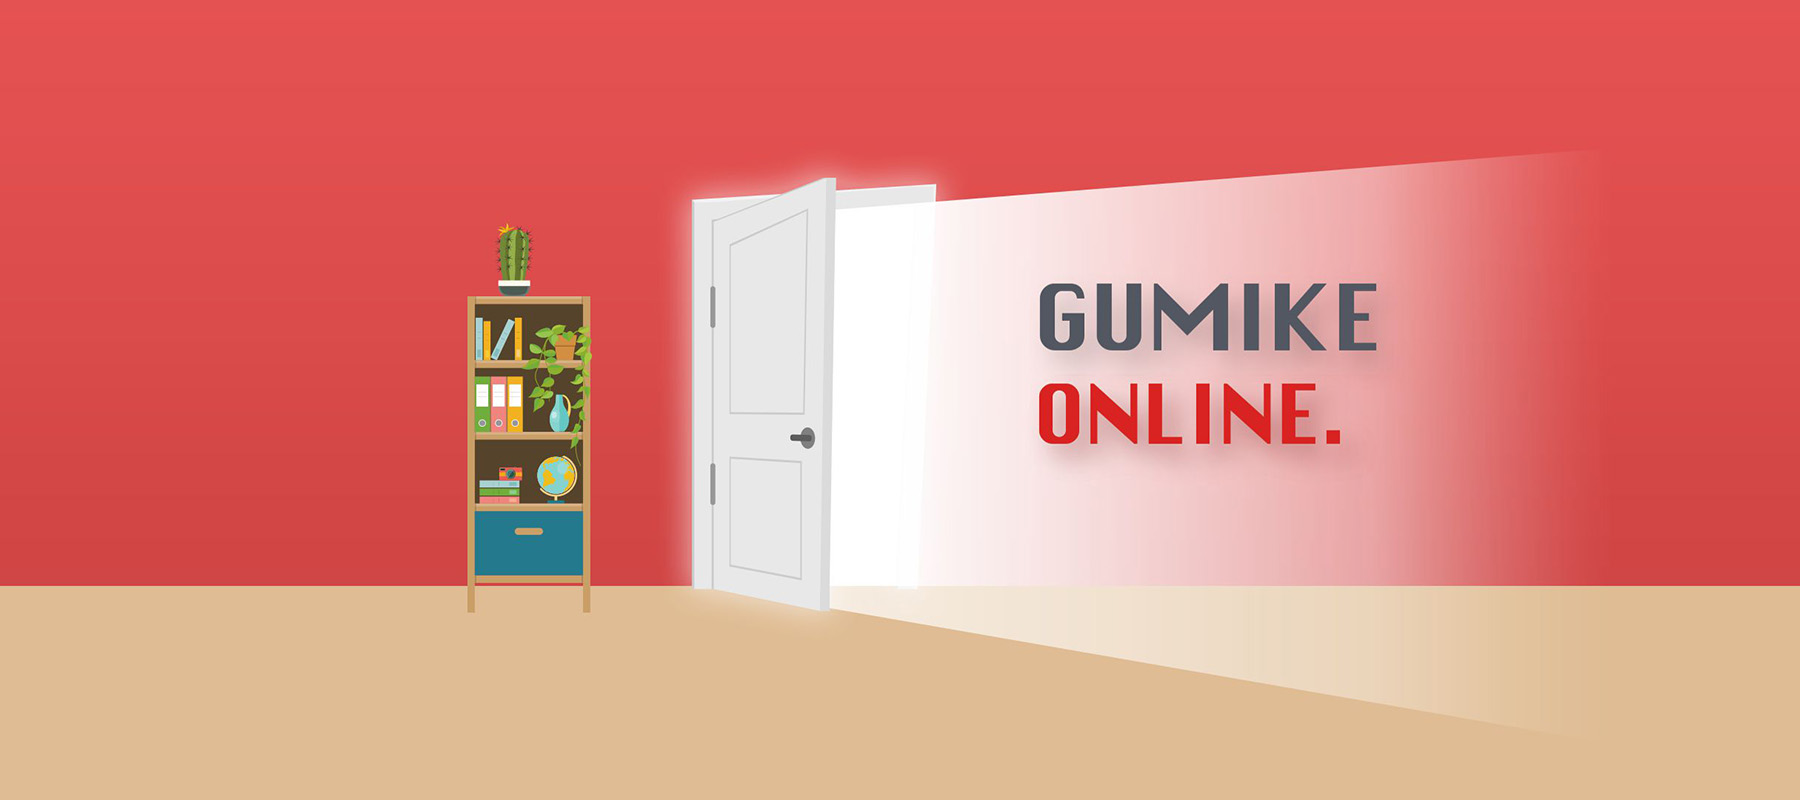 Gumike Online Showcase